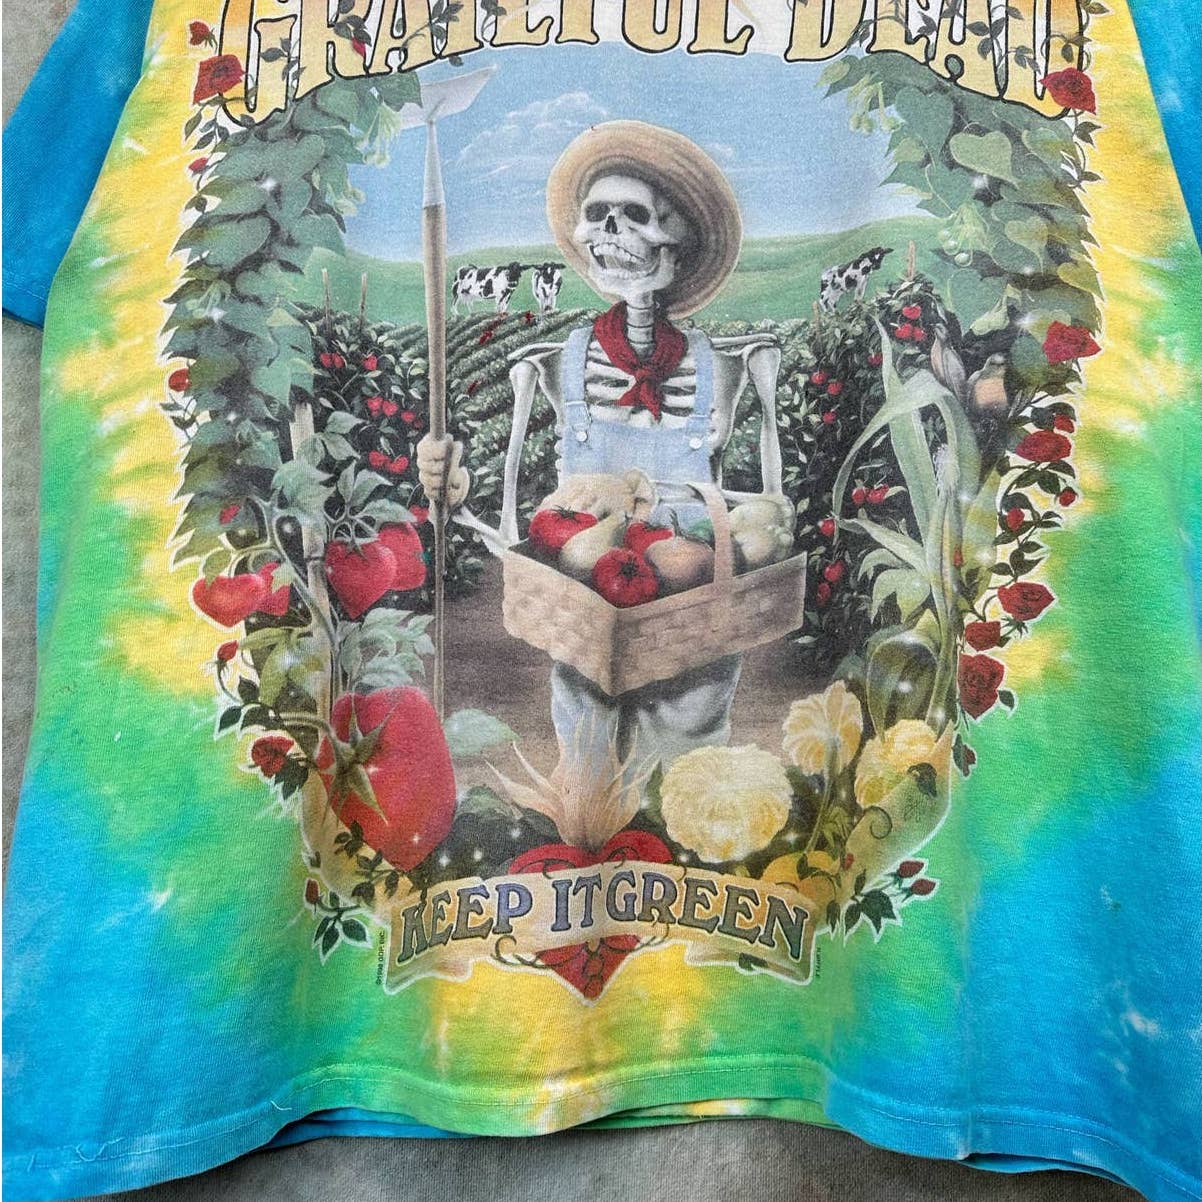 Vintage Grateful Dead Band T Shirt M